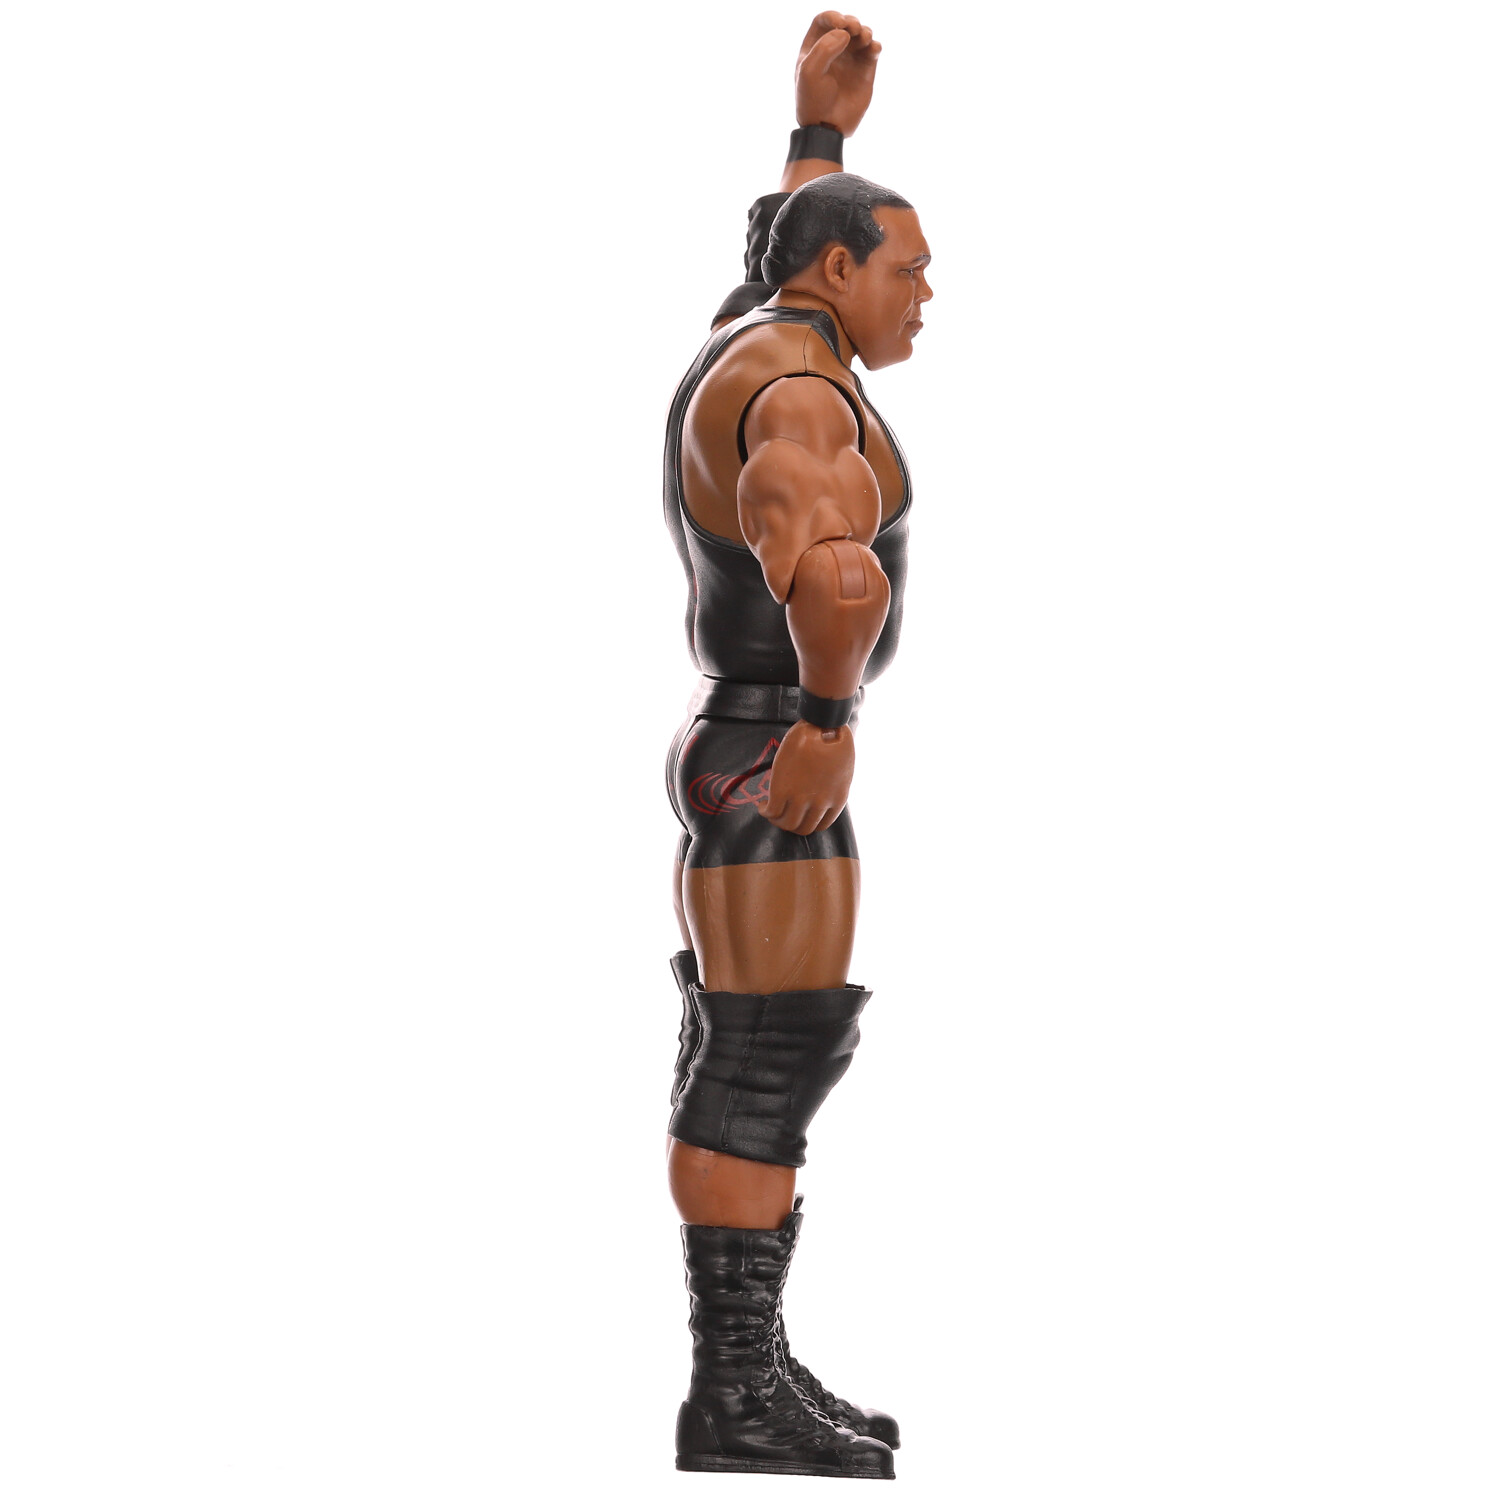 WWE figurine articulée de catch Keith Lee, en tenue de combat, joue